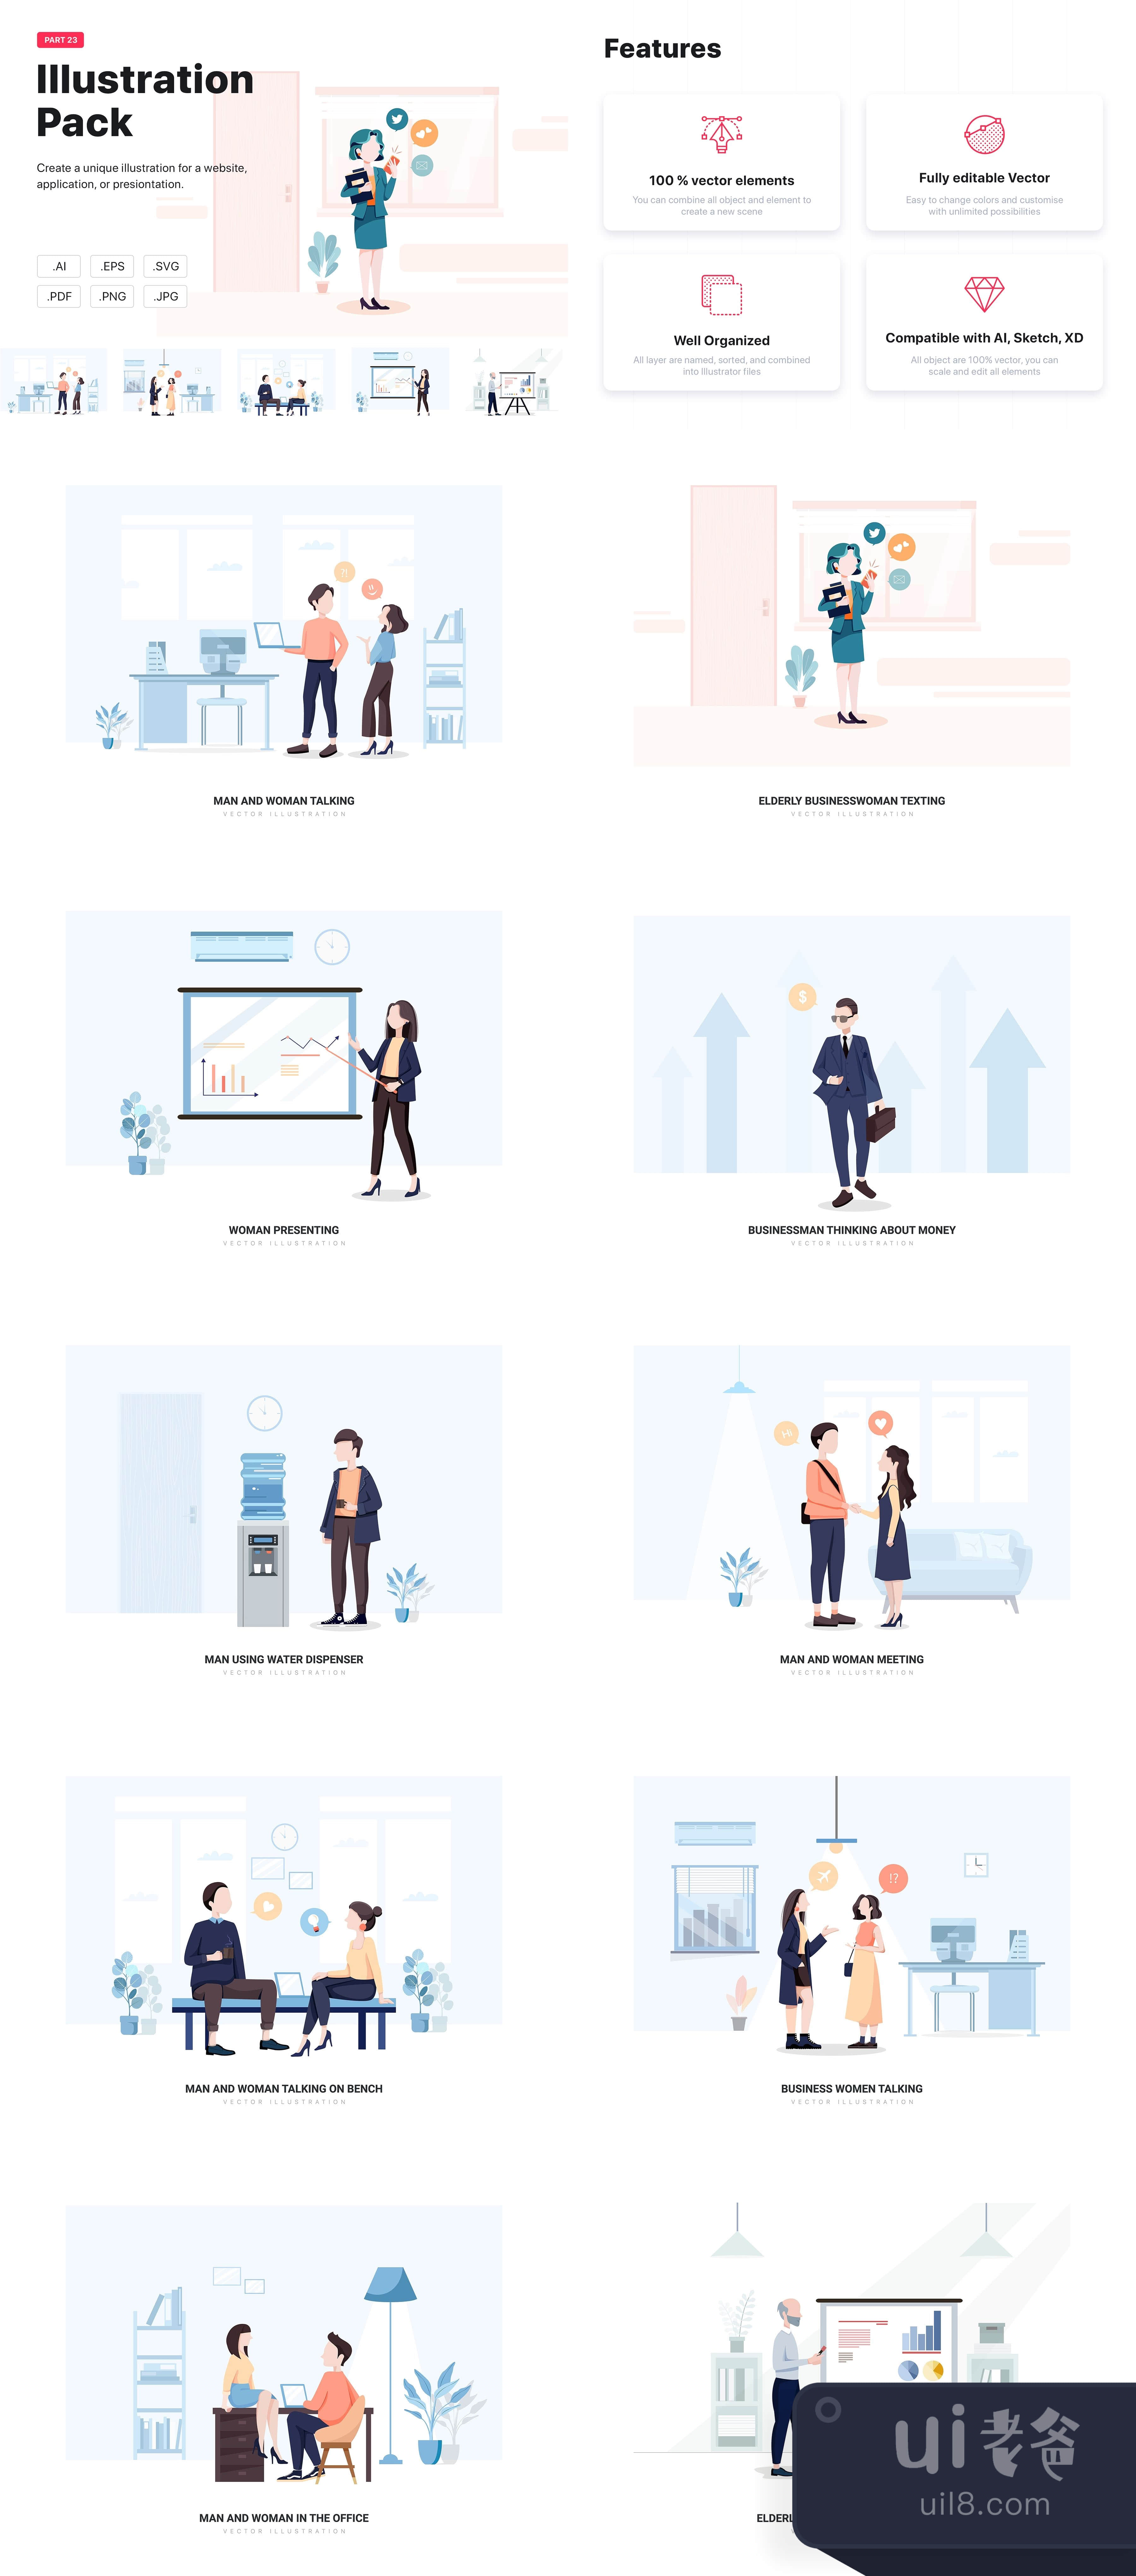 天秤座 - 商业插图包 (Libra - Business Illustration Pack)插图